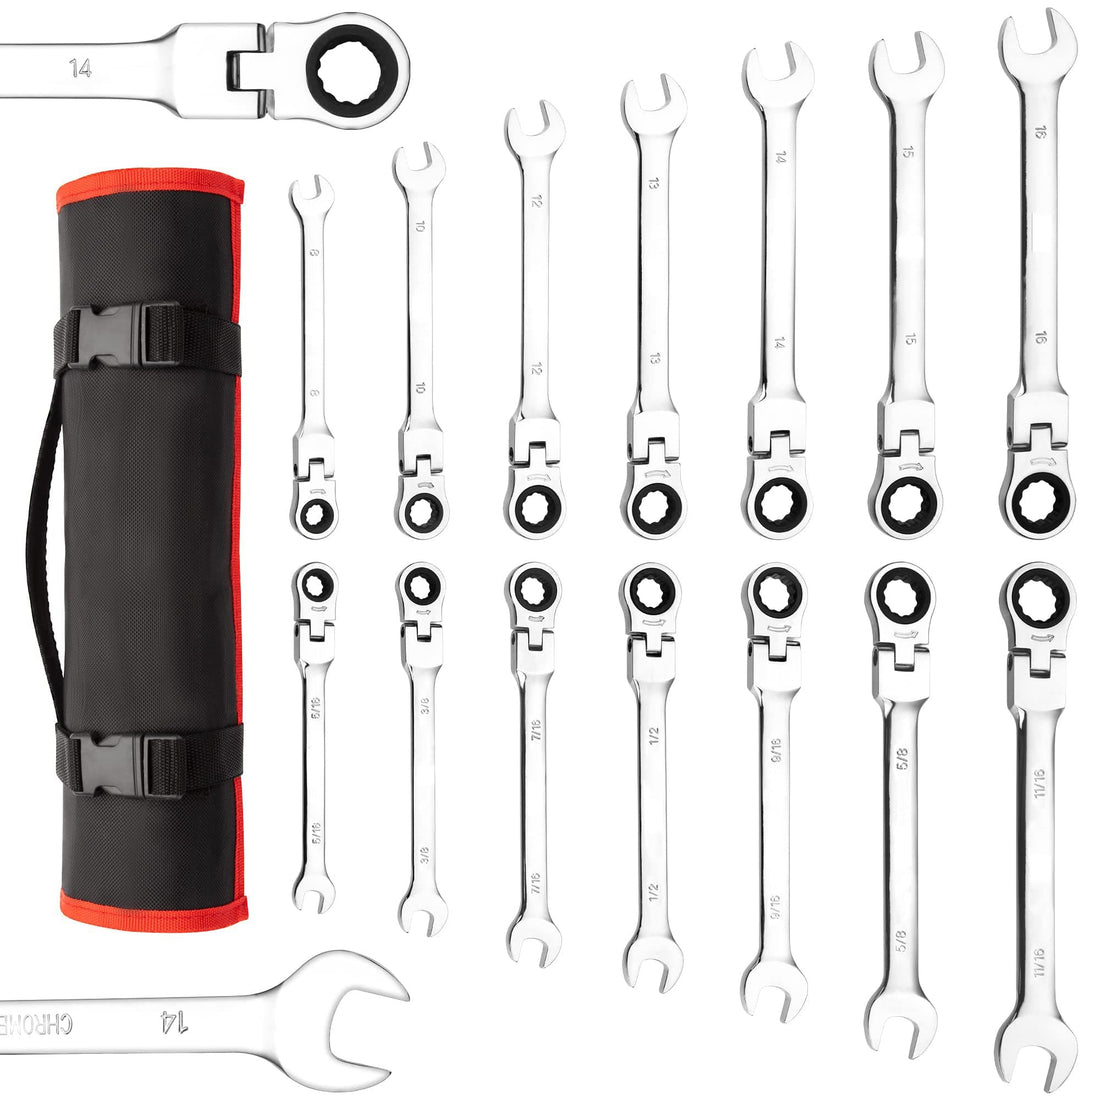 14PCS Flex-Head Wrench Set Ratcheting Combination Set SAE 5/16 -11/16 Inch & Metric 8-16mm